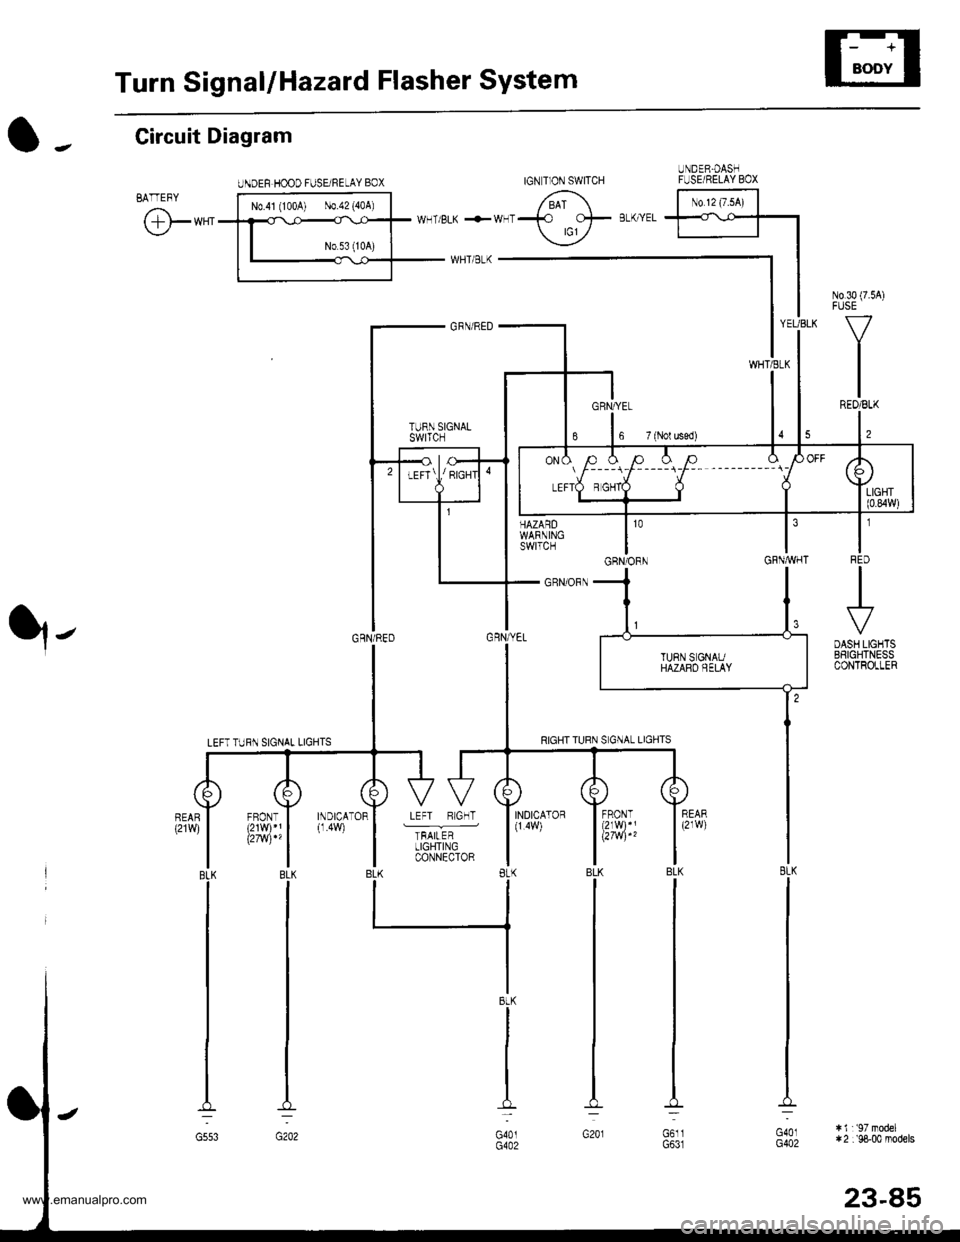 HONDA CR-V 1999 RD1-RD3 / 1.G User Guide 
Turn SignallHazard Flasher System
UNDEF HOOD FUSE/NELAY BOX
N0.30 (7.54)FUSE
V
IREO/BLK
l,
tIFqD
.+
DASH LIGHTSBSIGHTNESSCONTROLLER
HAZARDWARNINGswtTcH
_ GRN/ORN
YEUBLK
WHTiELK
GRNAVHT
O -. Circuit 